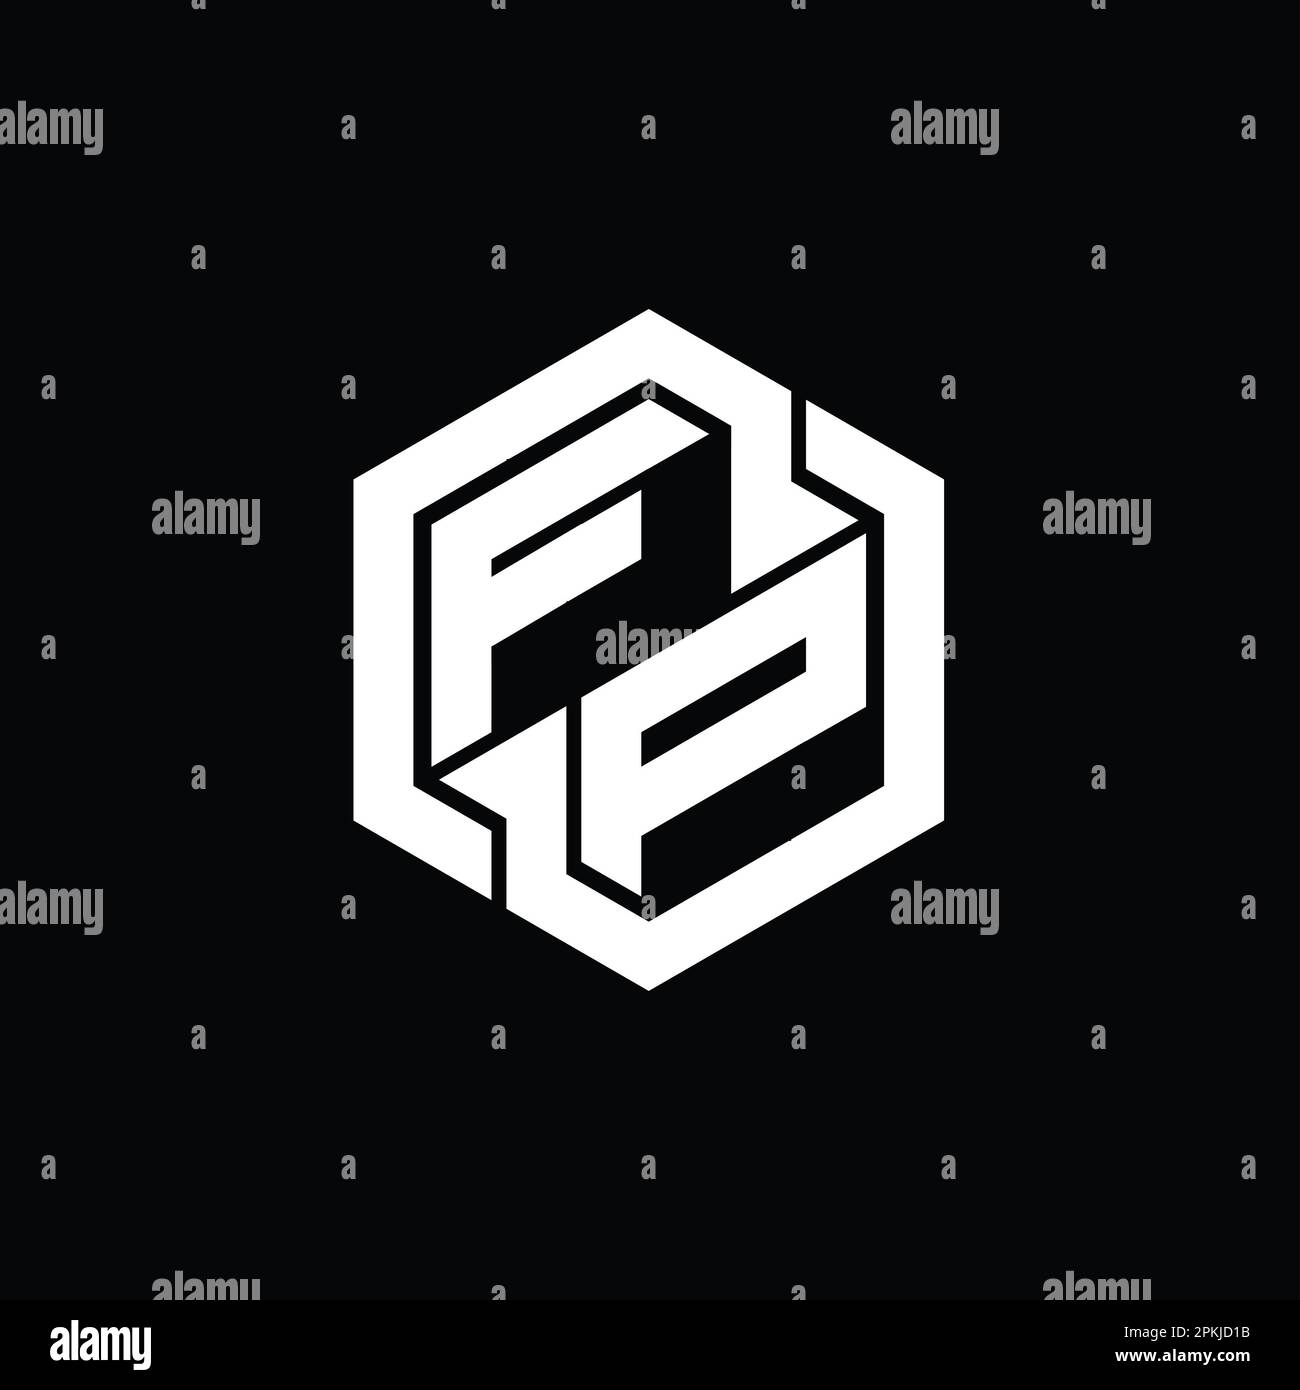 FP Logo monogram gaming with hexagon geometric shape design template Stock Photo